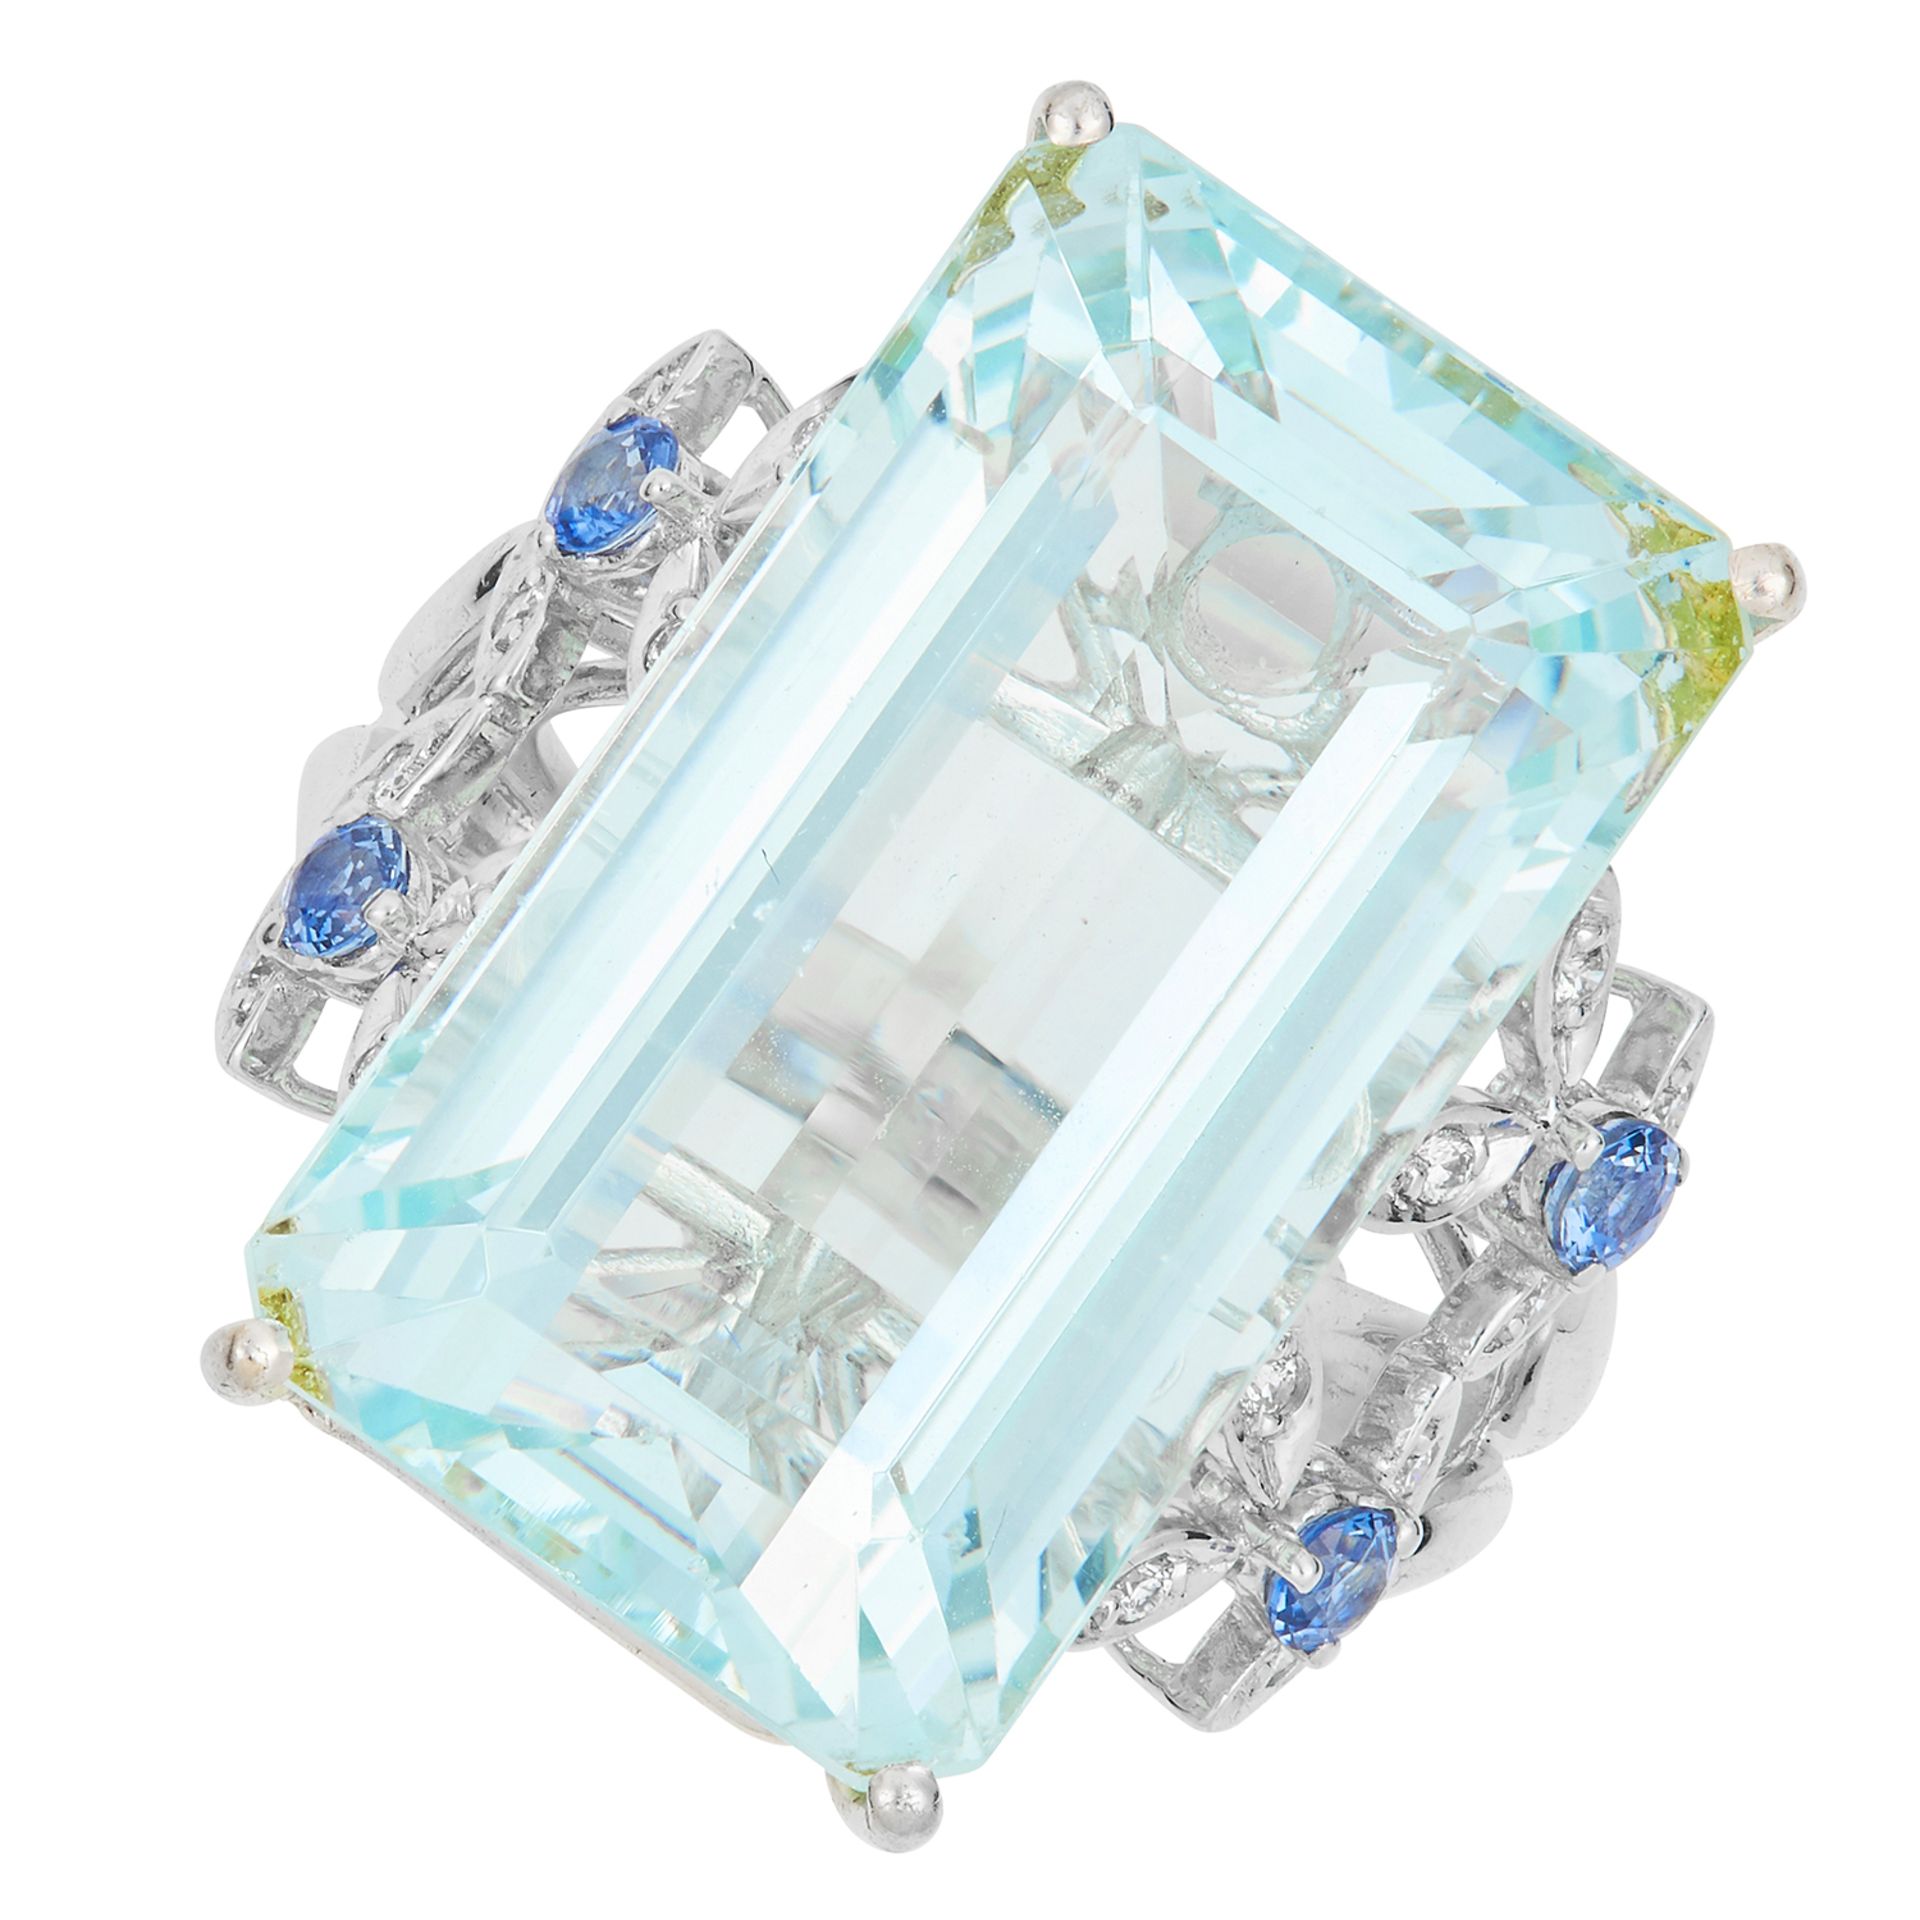 AQUAMARINE, SAPPHIRE AND DIAMOND RING set with an emerald cut aquamarine of 38.22 carats, round